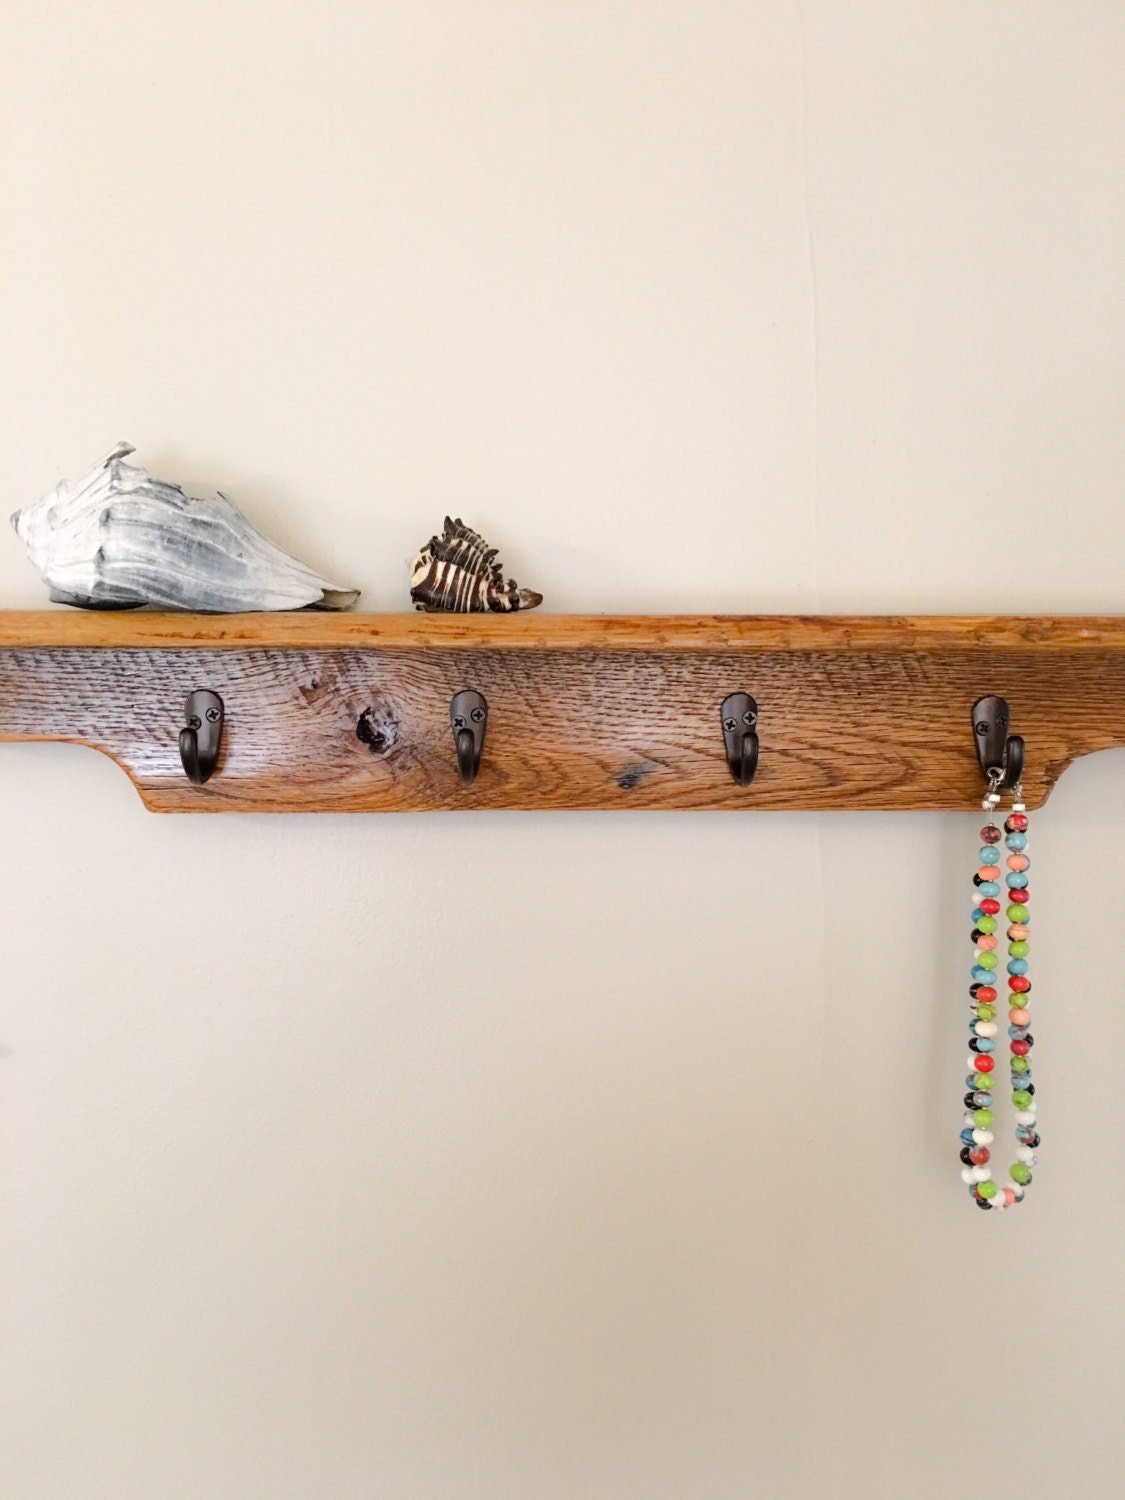 Rustic Coat Rack Shelf Reclaimed Wood Aprons Jewelry